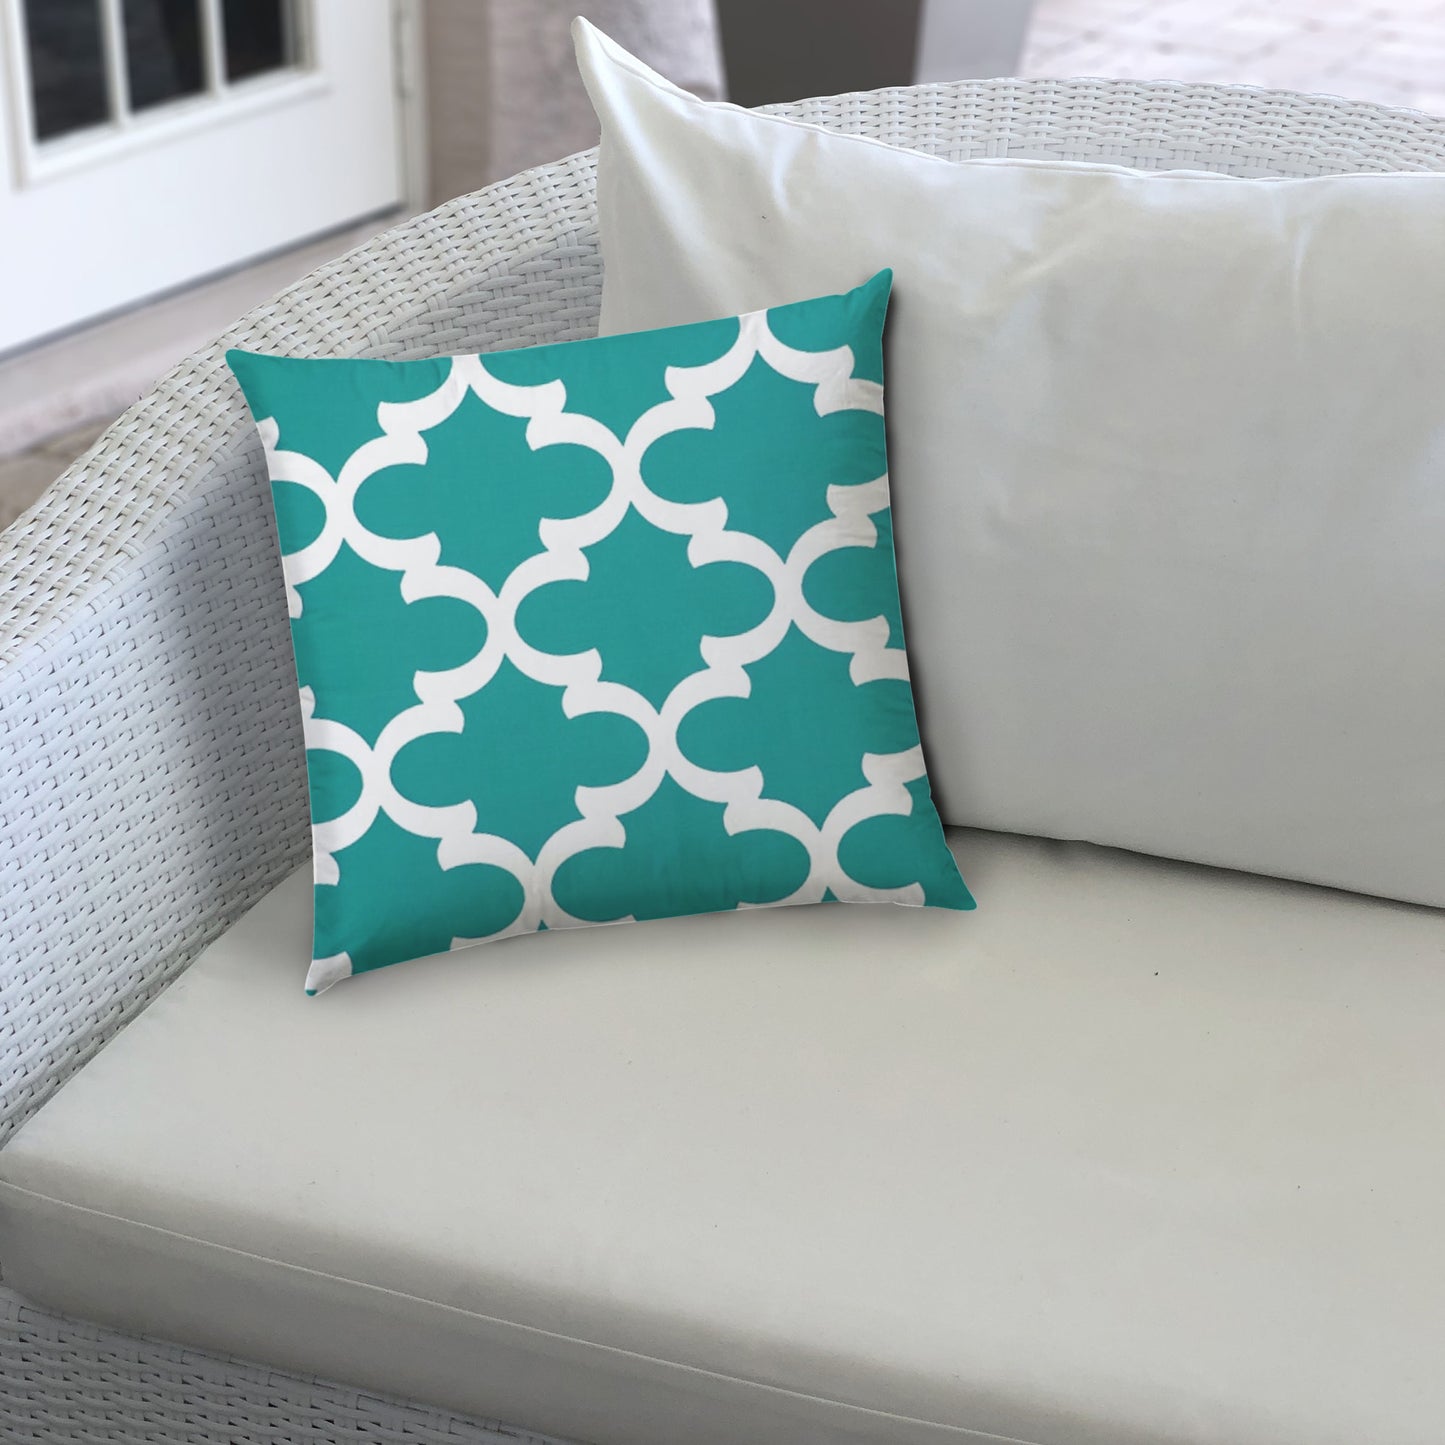 FLANNIGAN Turquoise Indoor/Outdoor Pillow - Sewn Closure